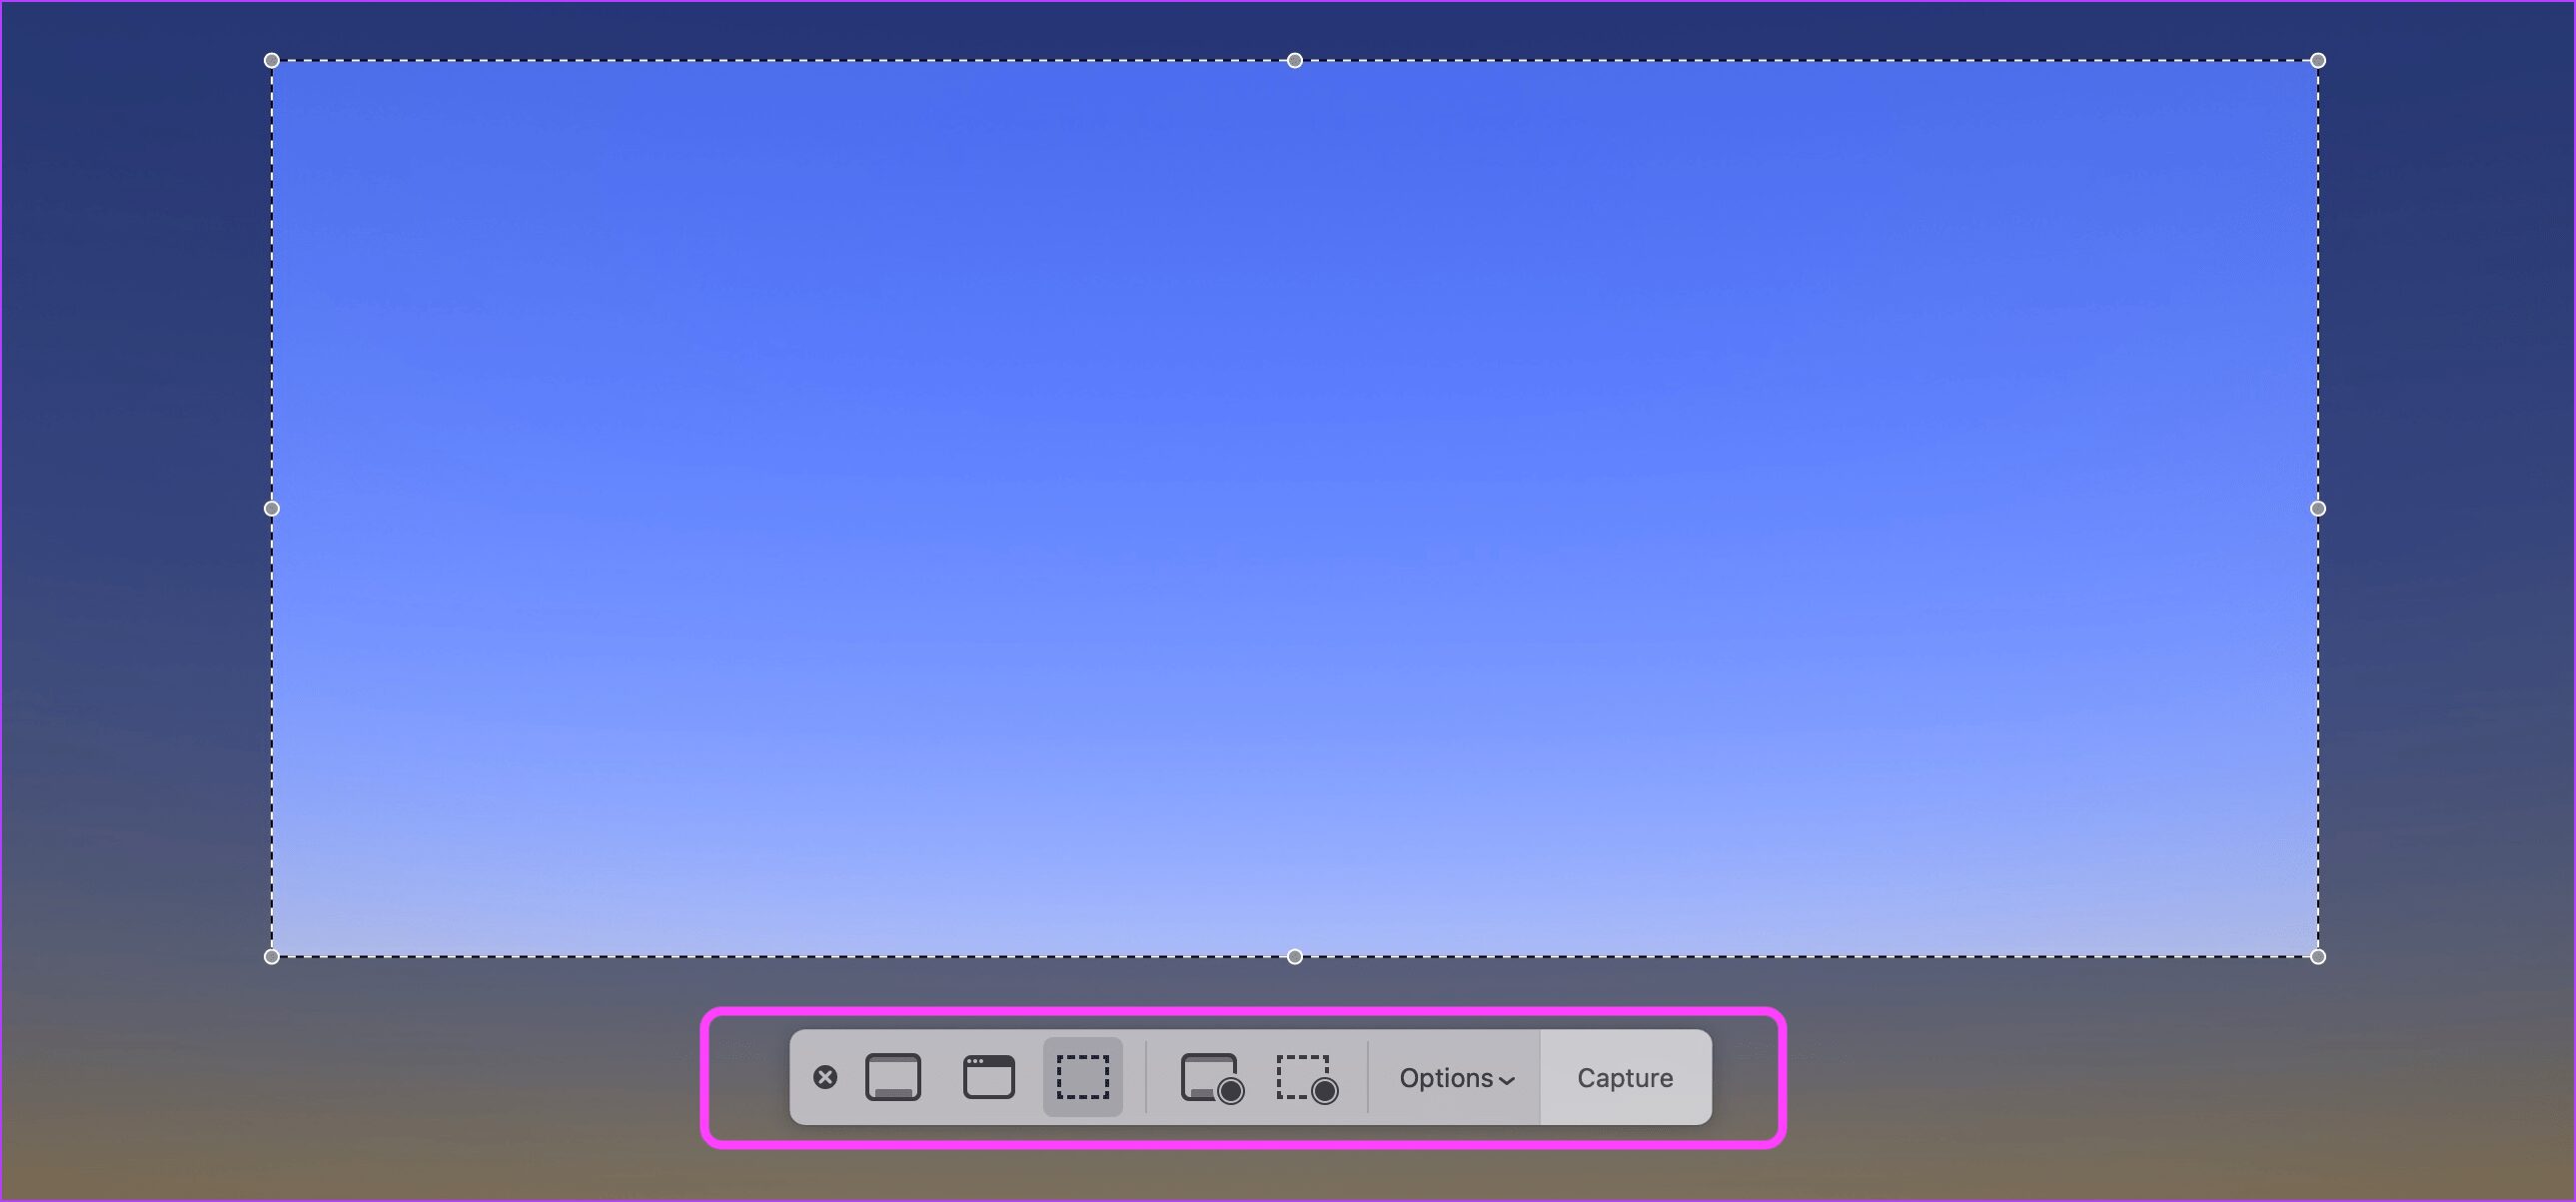 Capturar capturas de pantalla en Mac 4